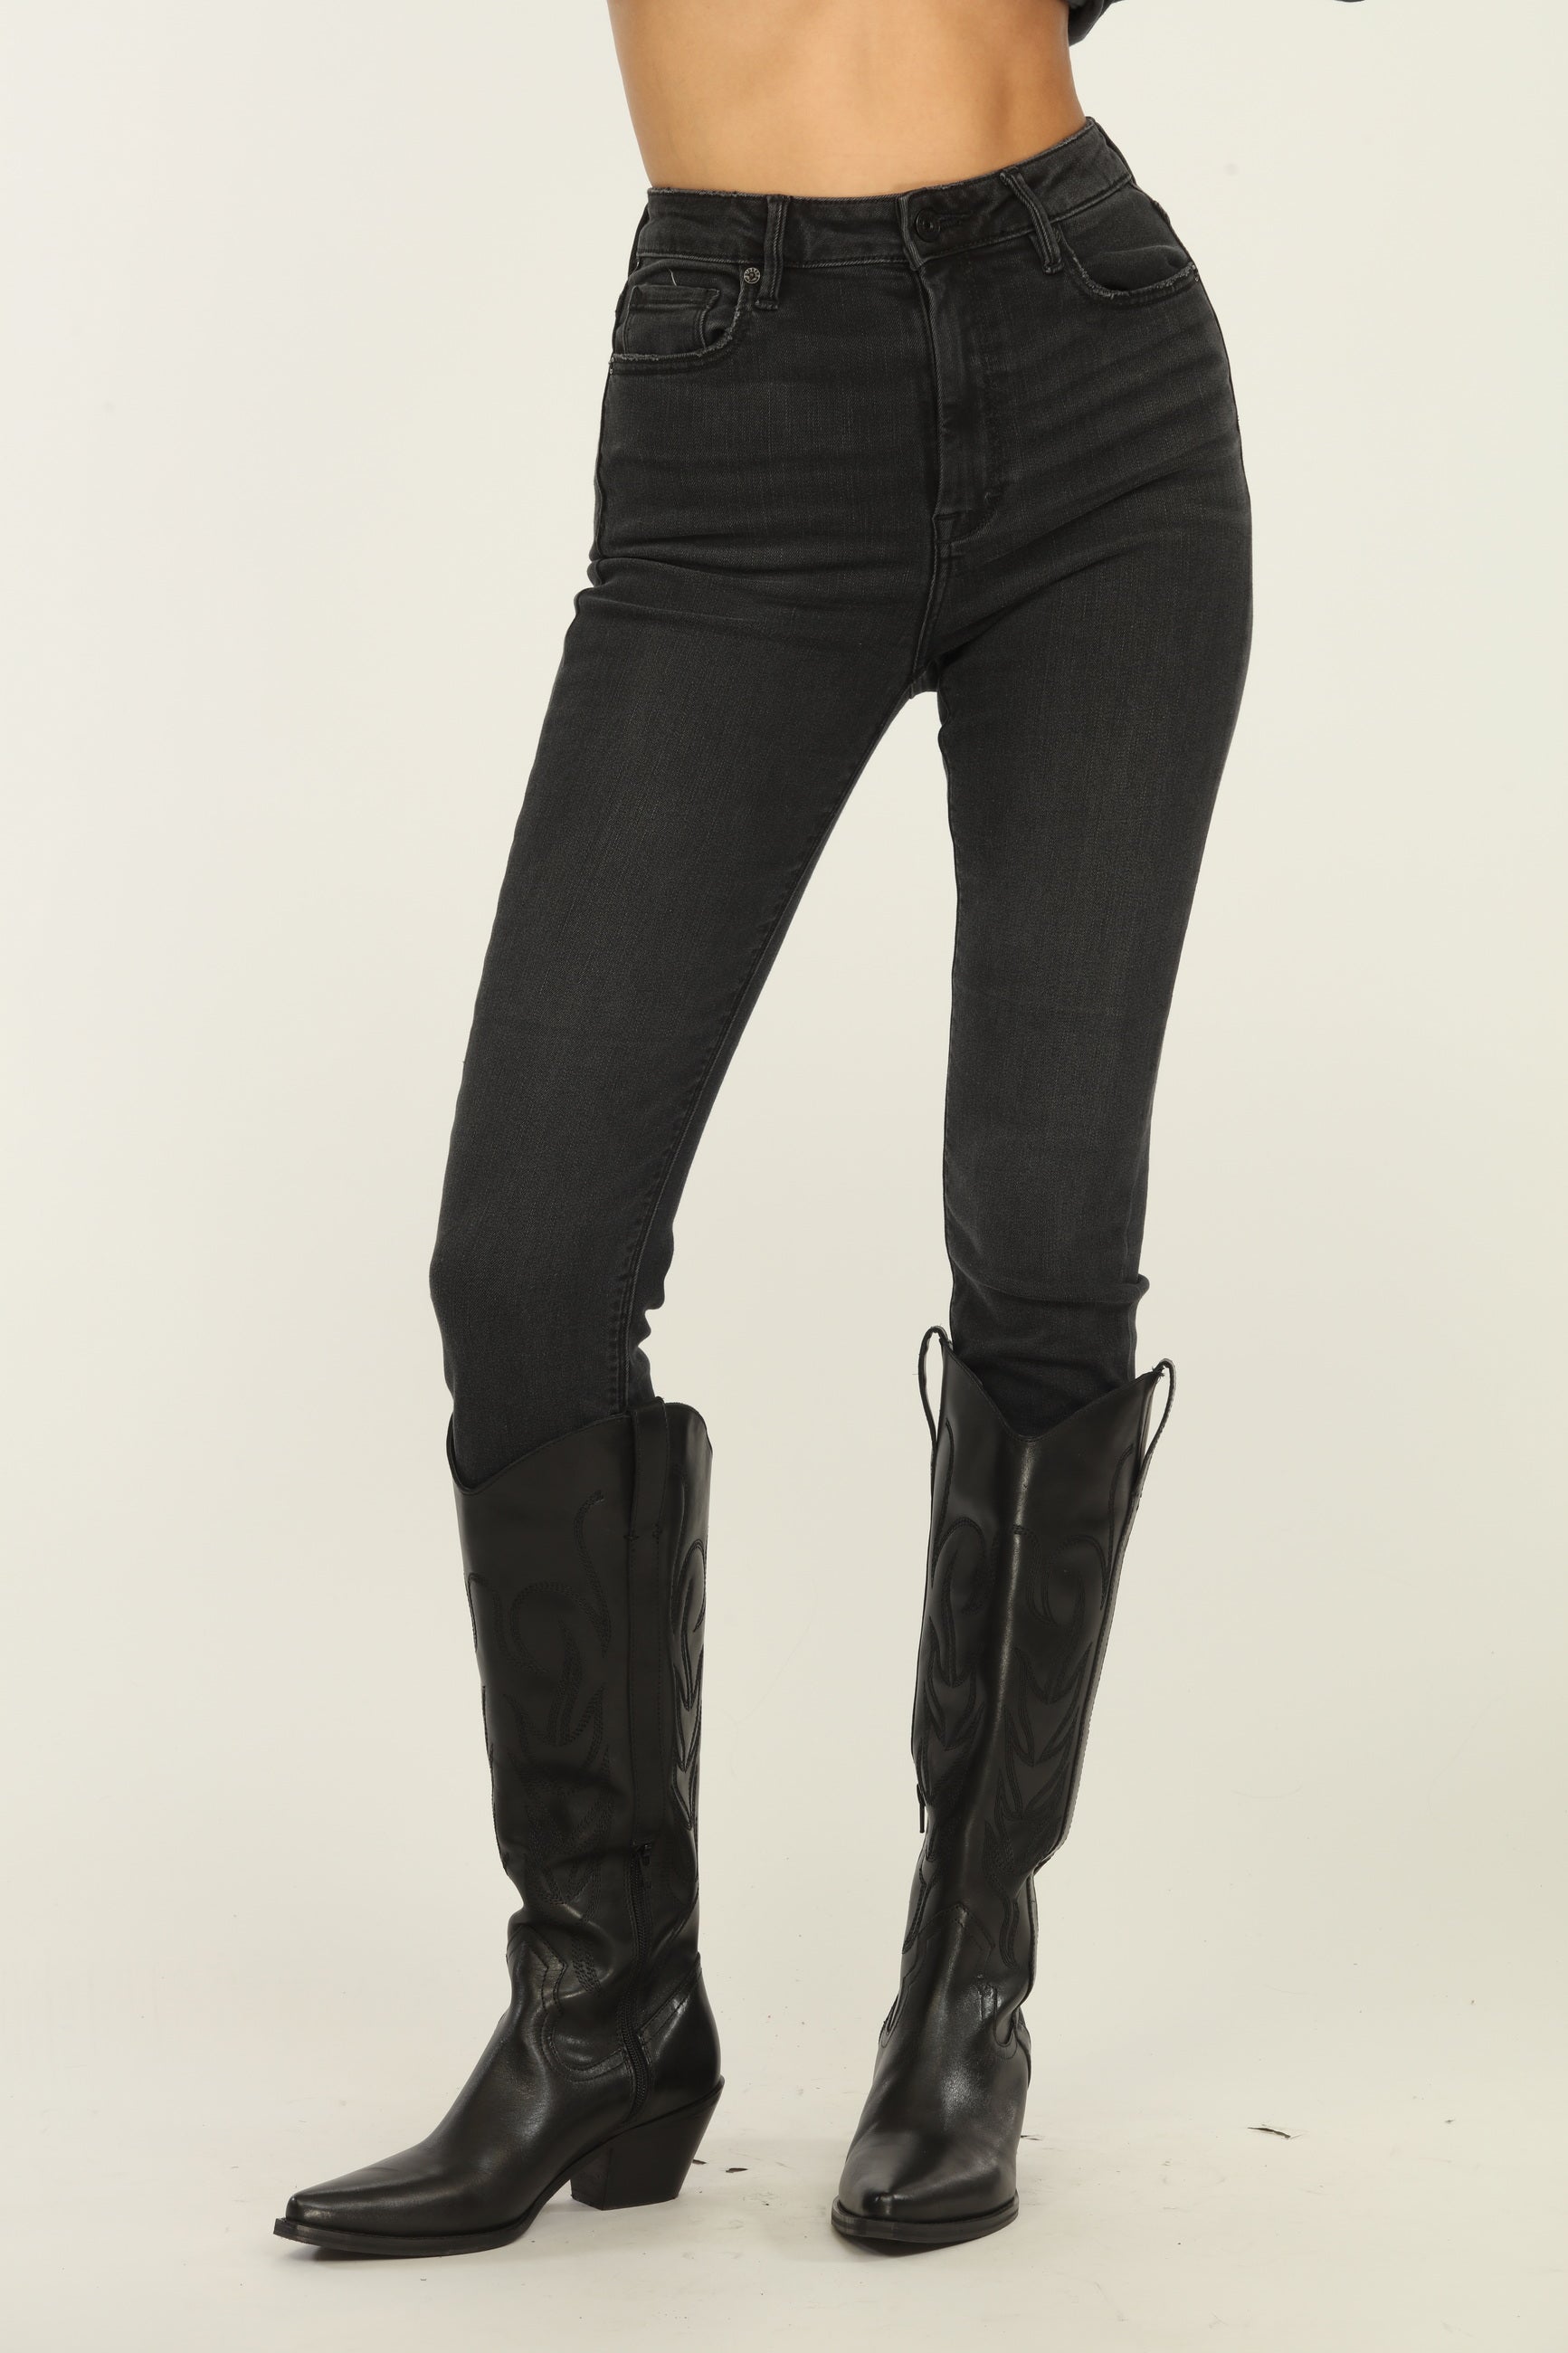 Taylor High Rise Skinny Jean With Front Slit- Black-FINAL SALE